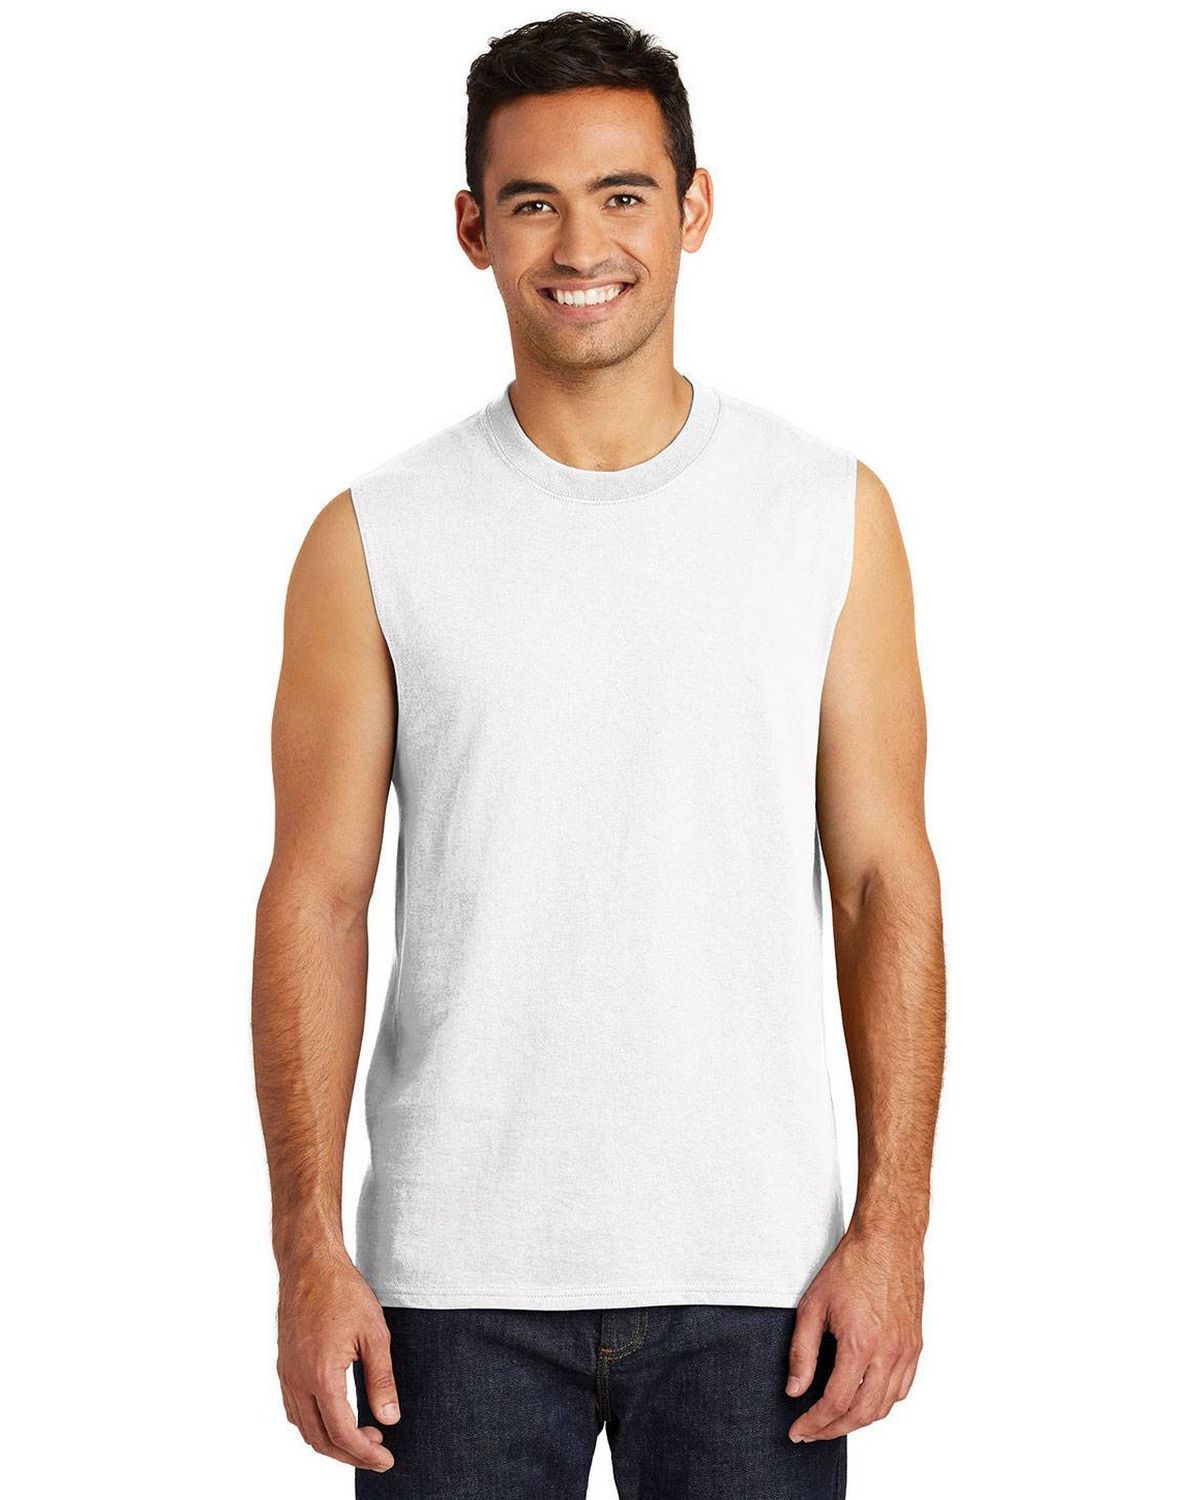 Size Chart for Port & Company PC54SL Mens Core Cotton Sleeveless T-Shirt